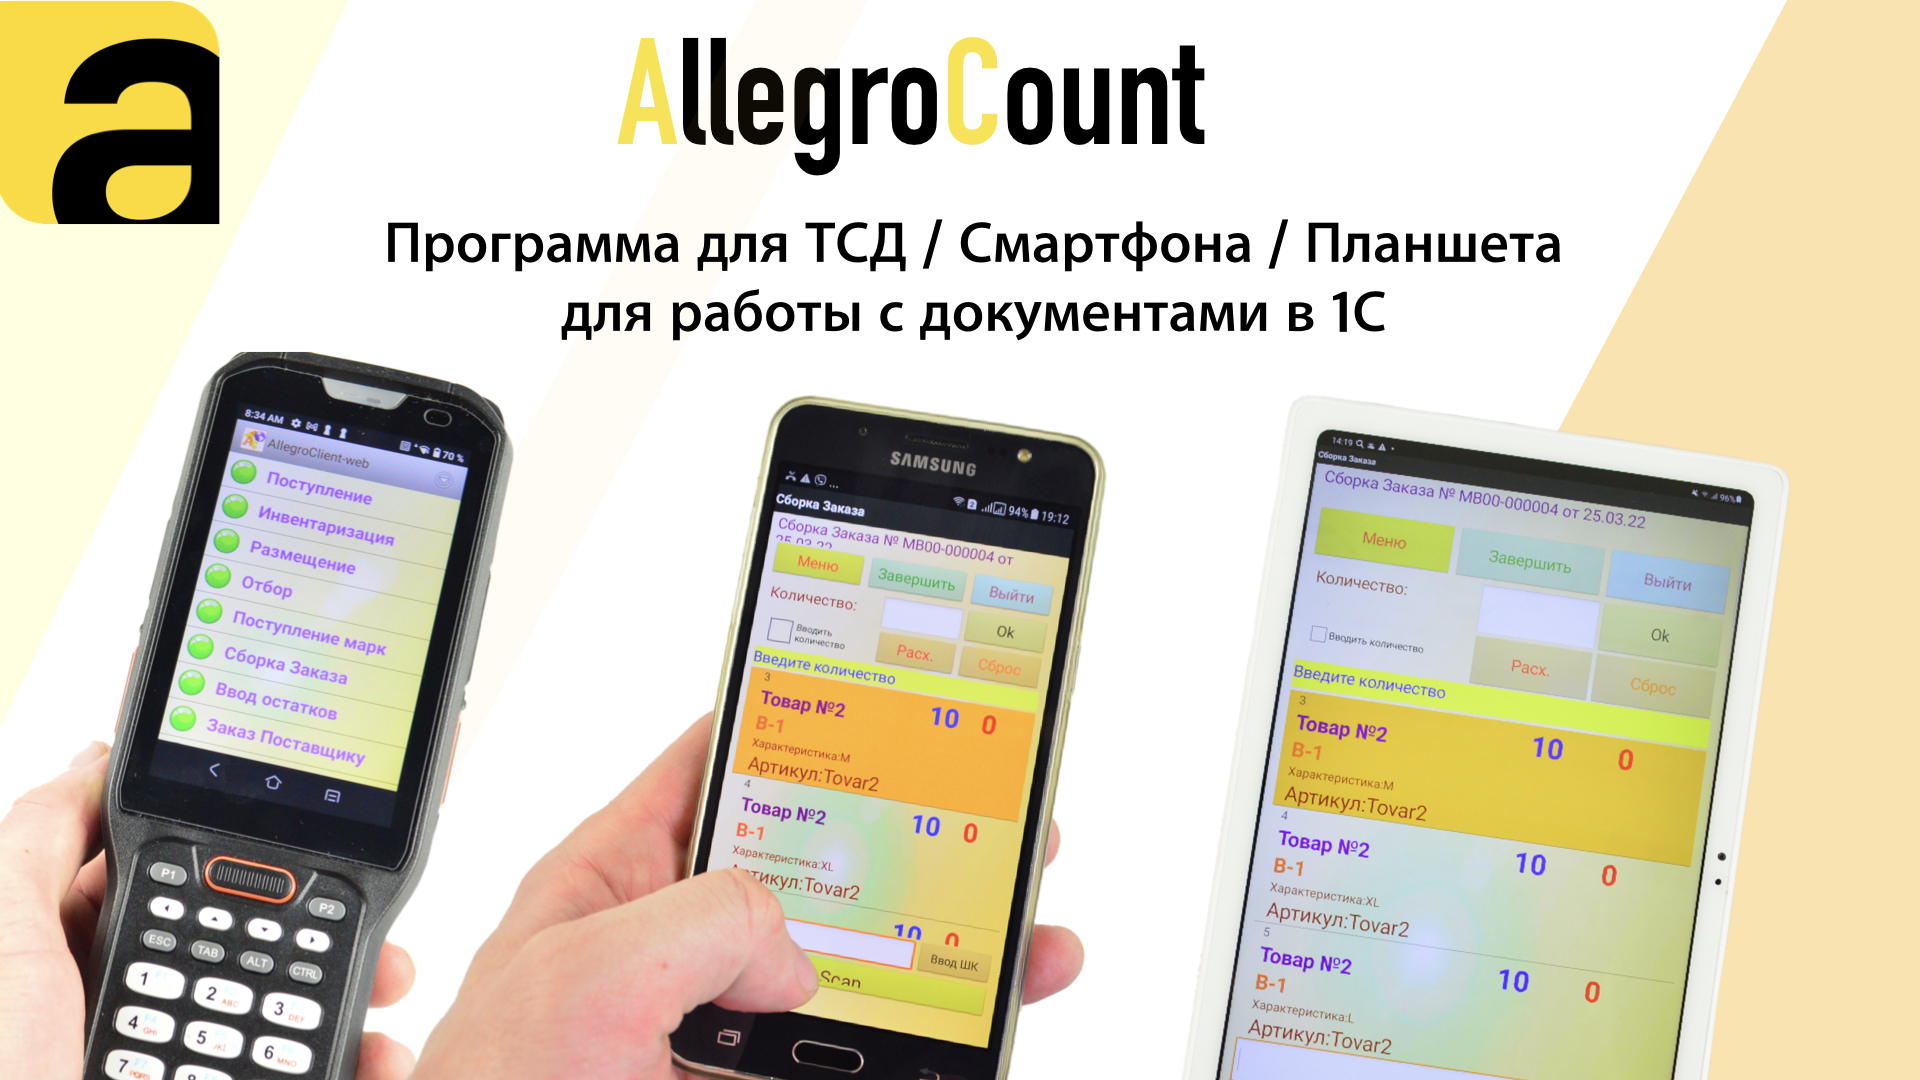 AllegroCount программа для работы в 1С